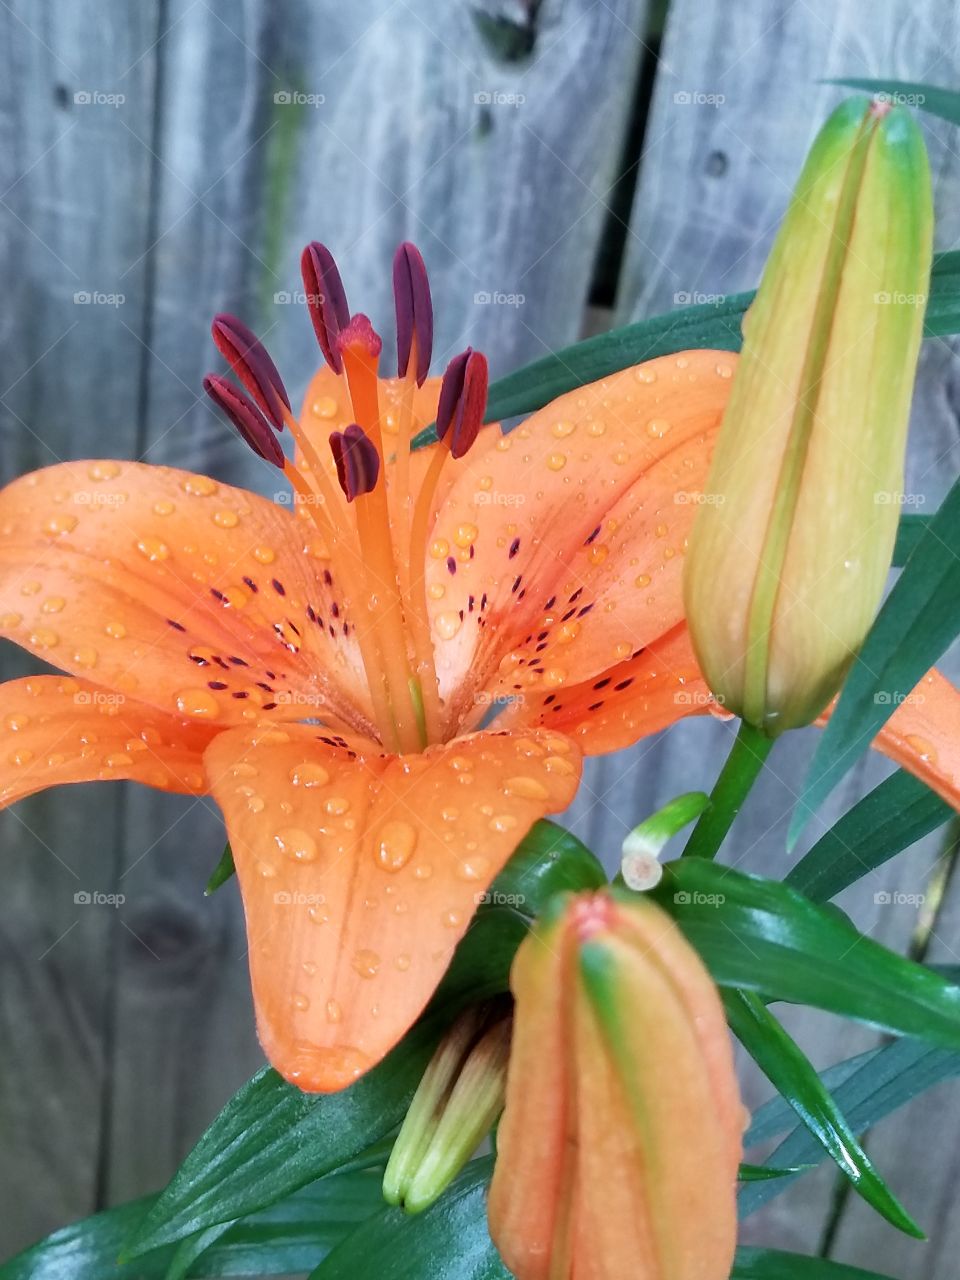 Lily catching rain